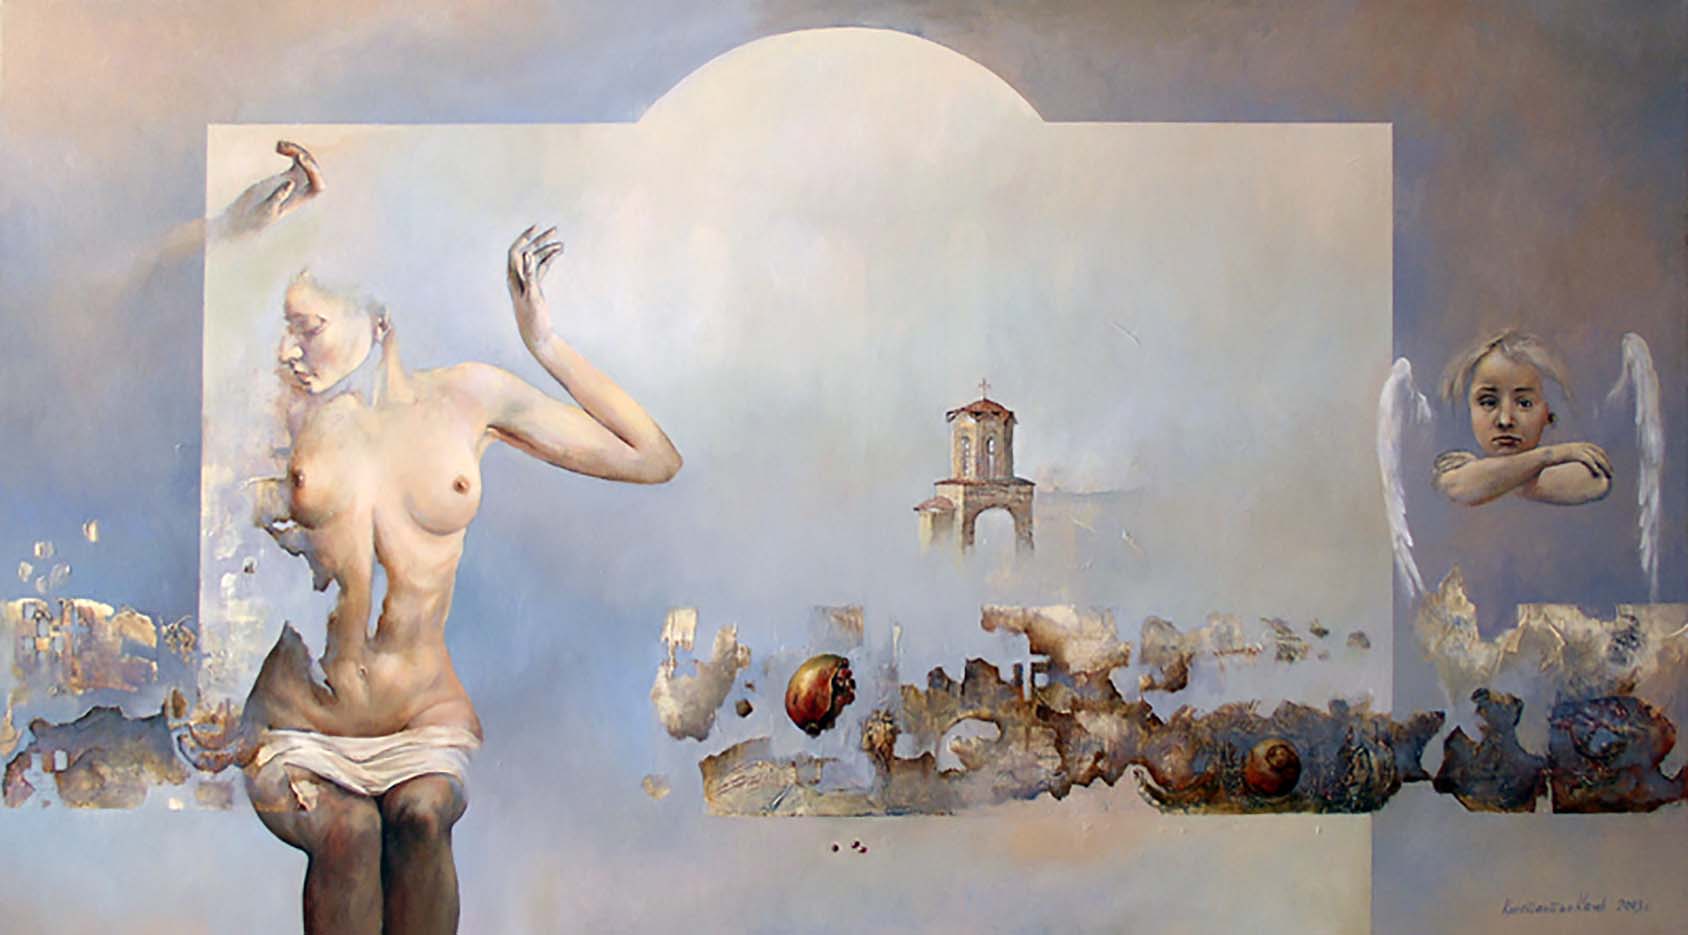 Константин Качев (Konstantin Kacev) “Untitled - 67“